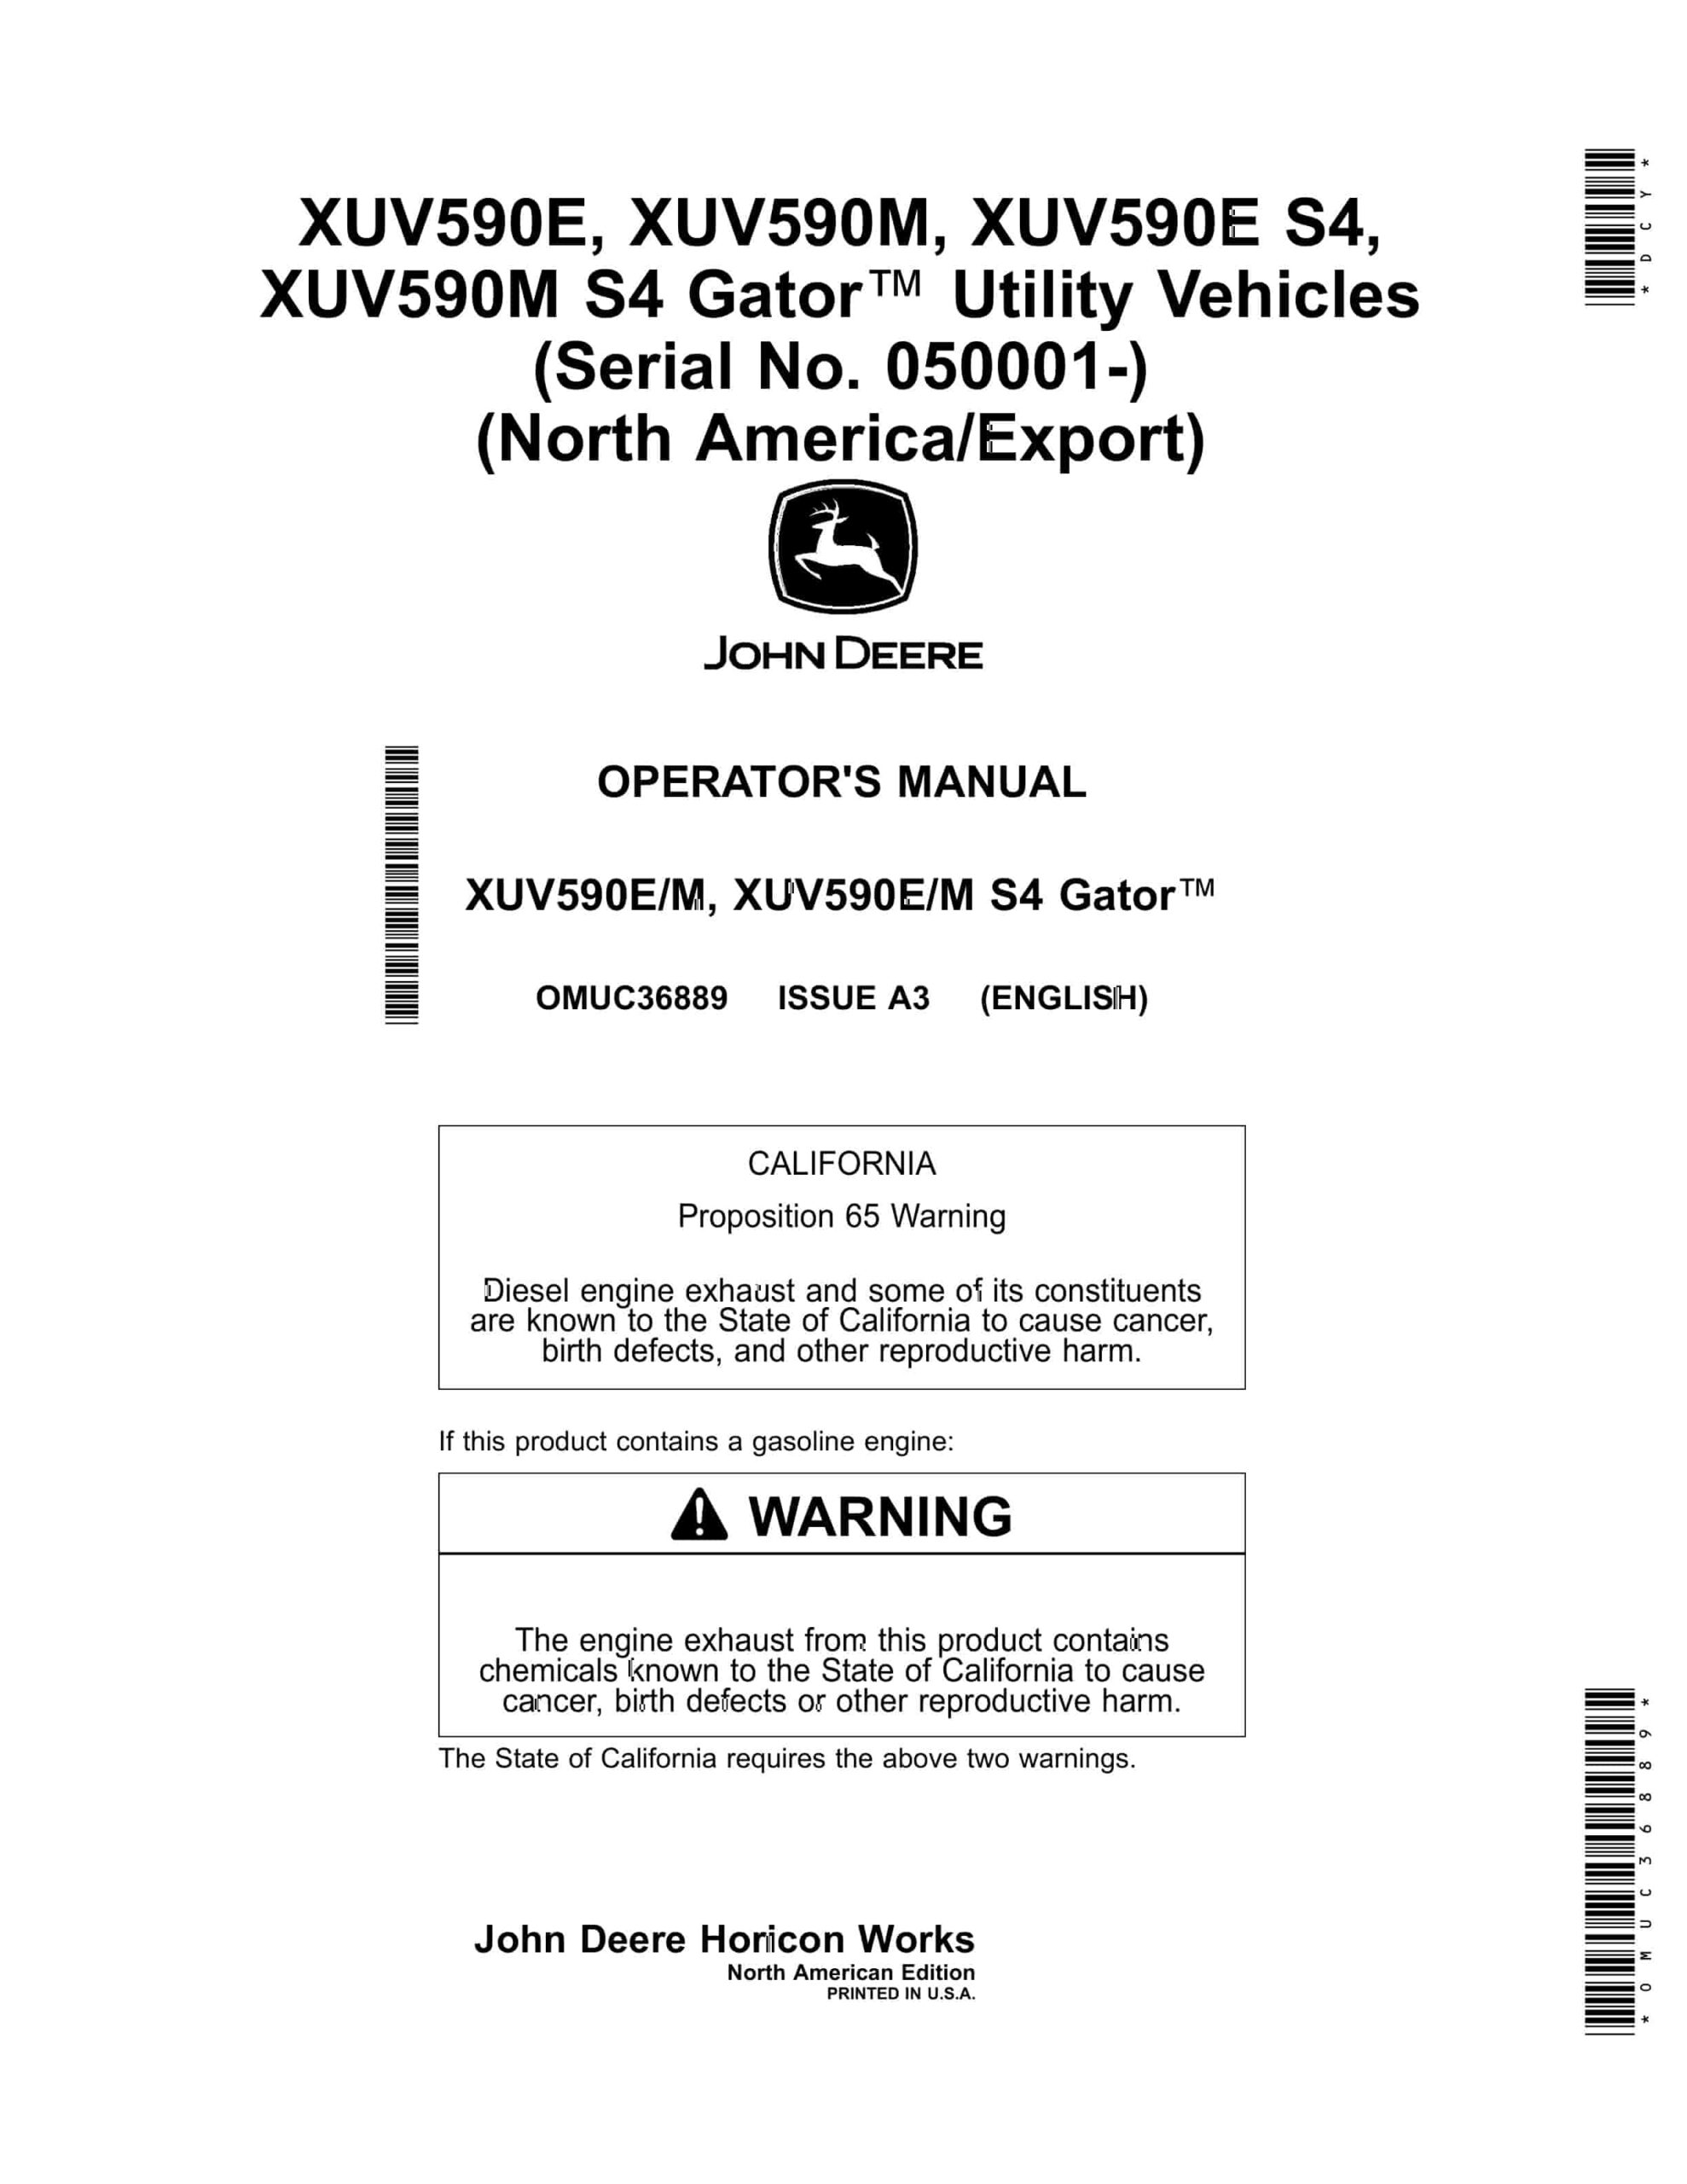 John Deere XUV590E, XUV590M, XUV590E S4, XUV590M S4 Gator Utility Vehicles Operator Manual OMUC36889-1